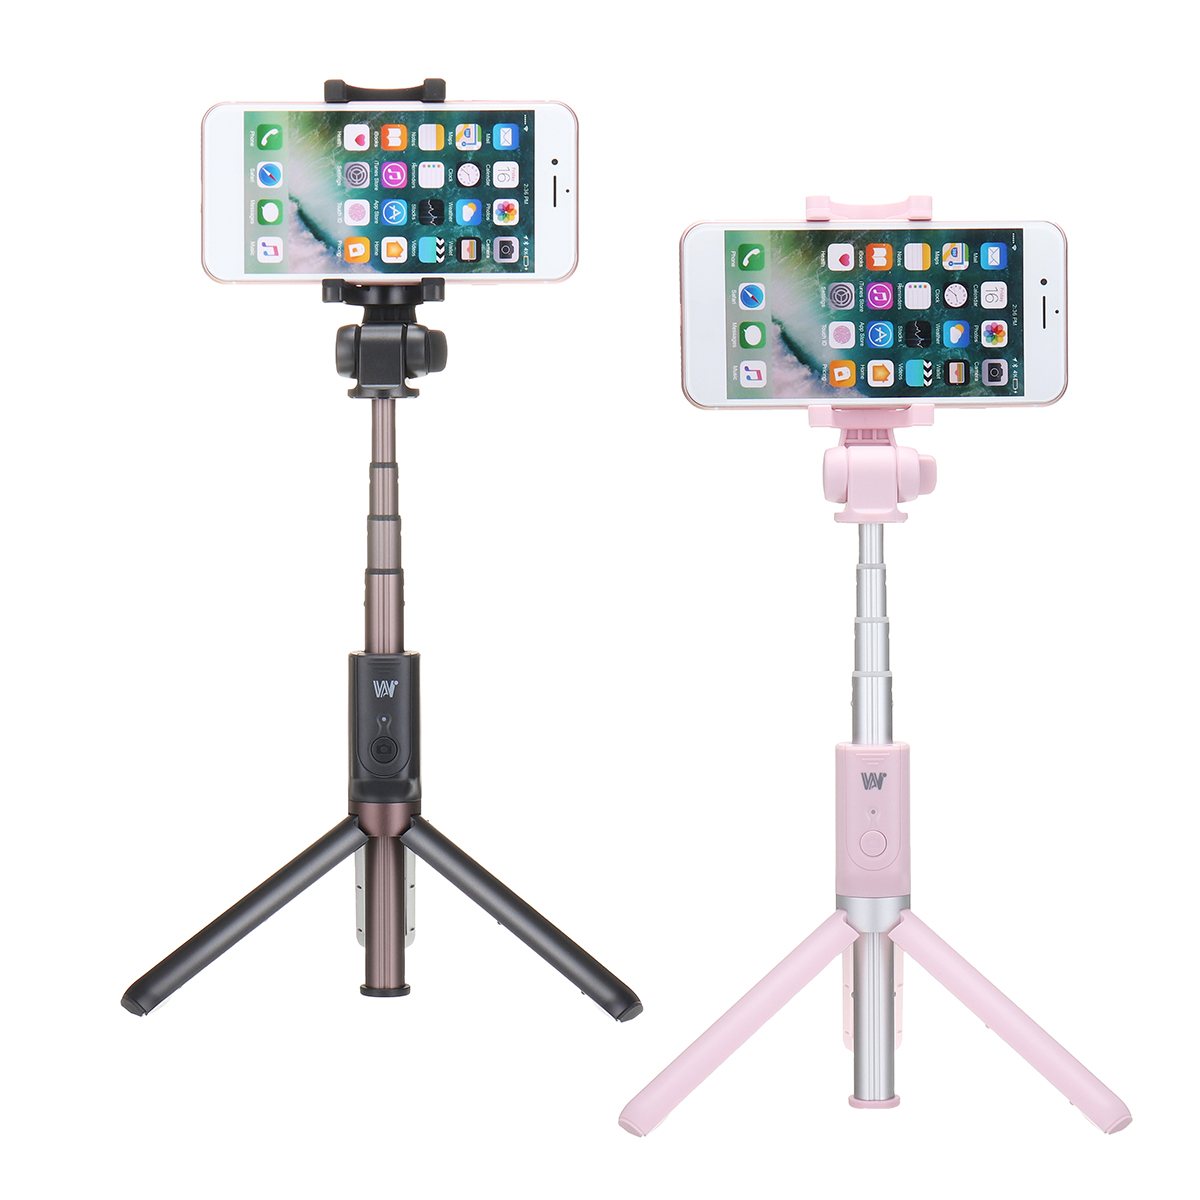 

Dispho Universal bluetooth Shutter 360 Degree Rotation Extendable Selfie Stick Phone Tripod Mount Monopod